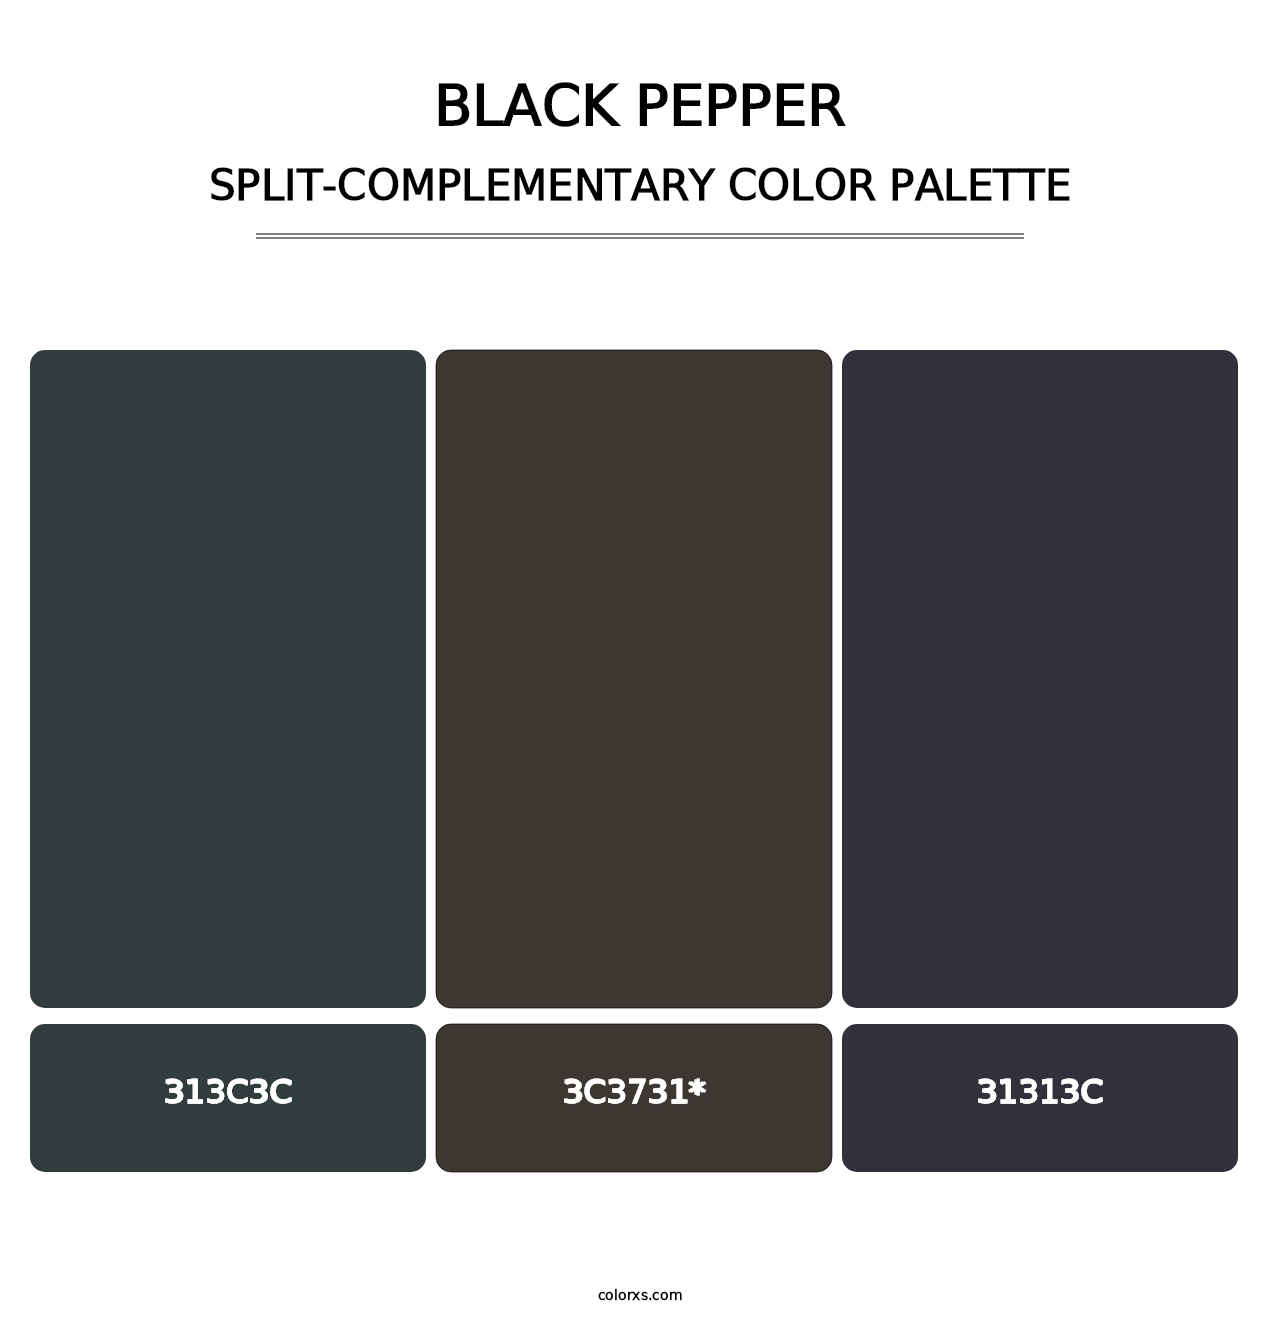 Black Pepper - Split-Complementary Color Palette